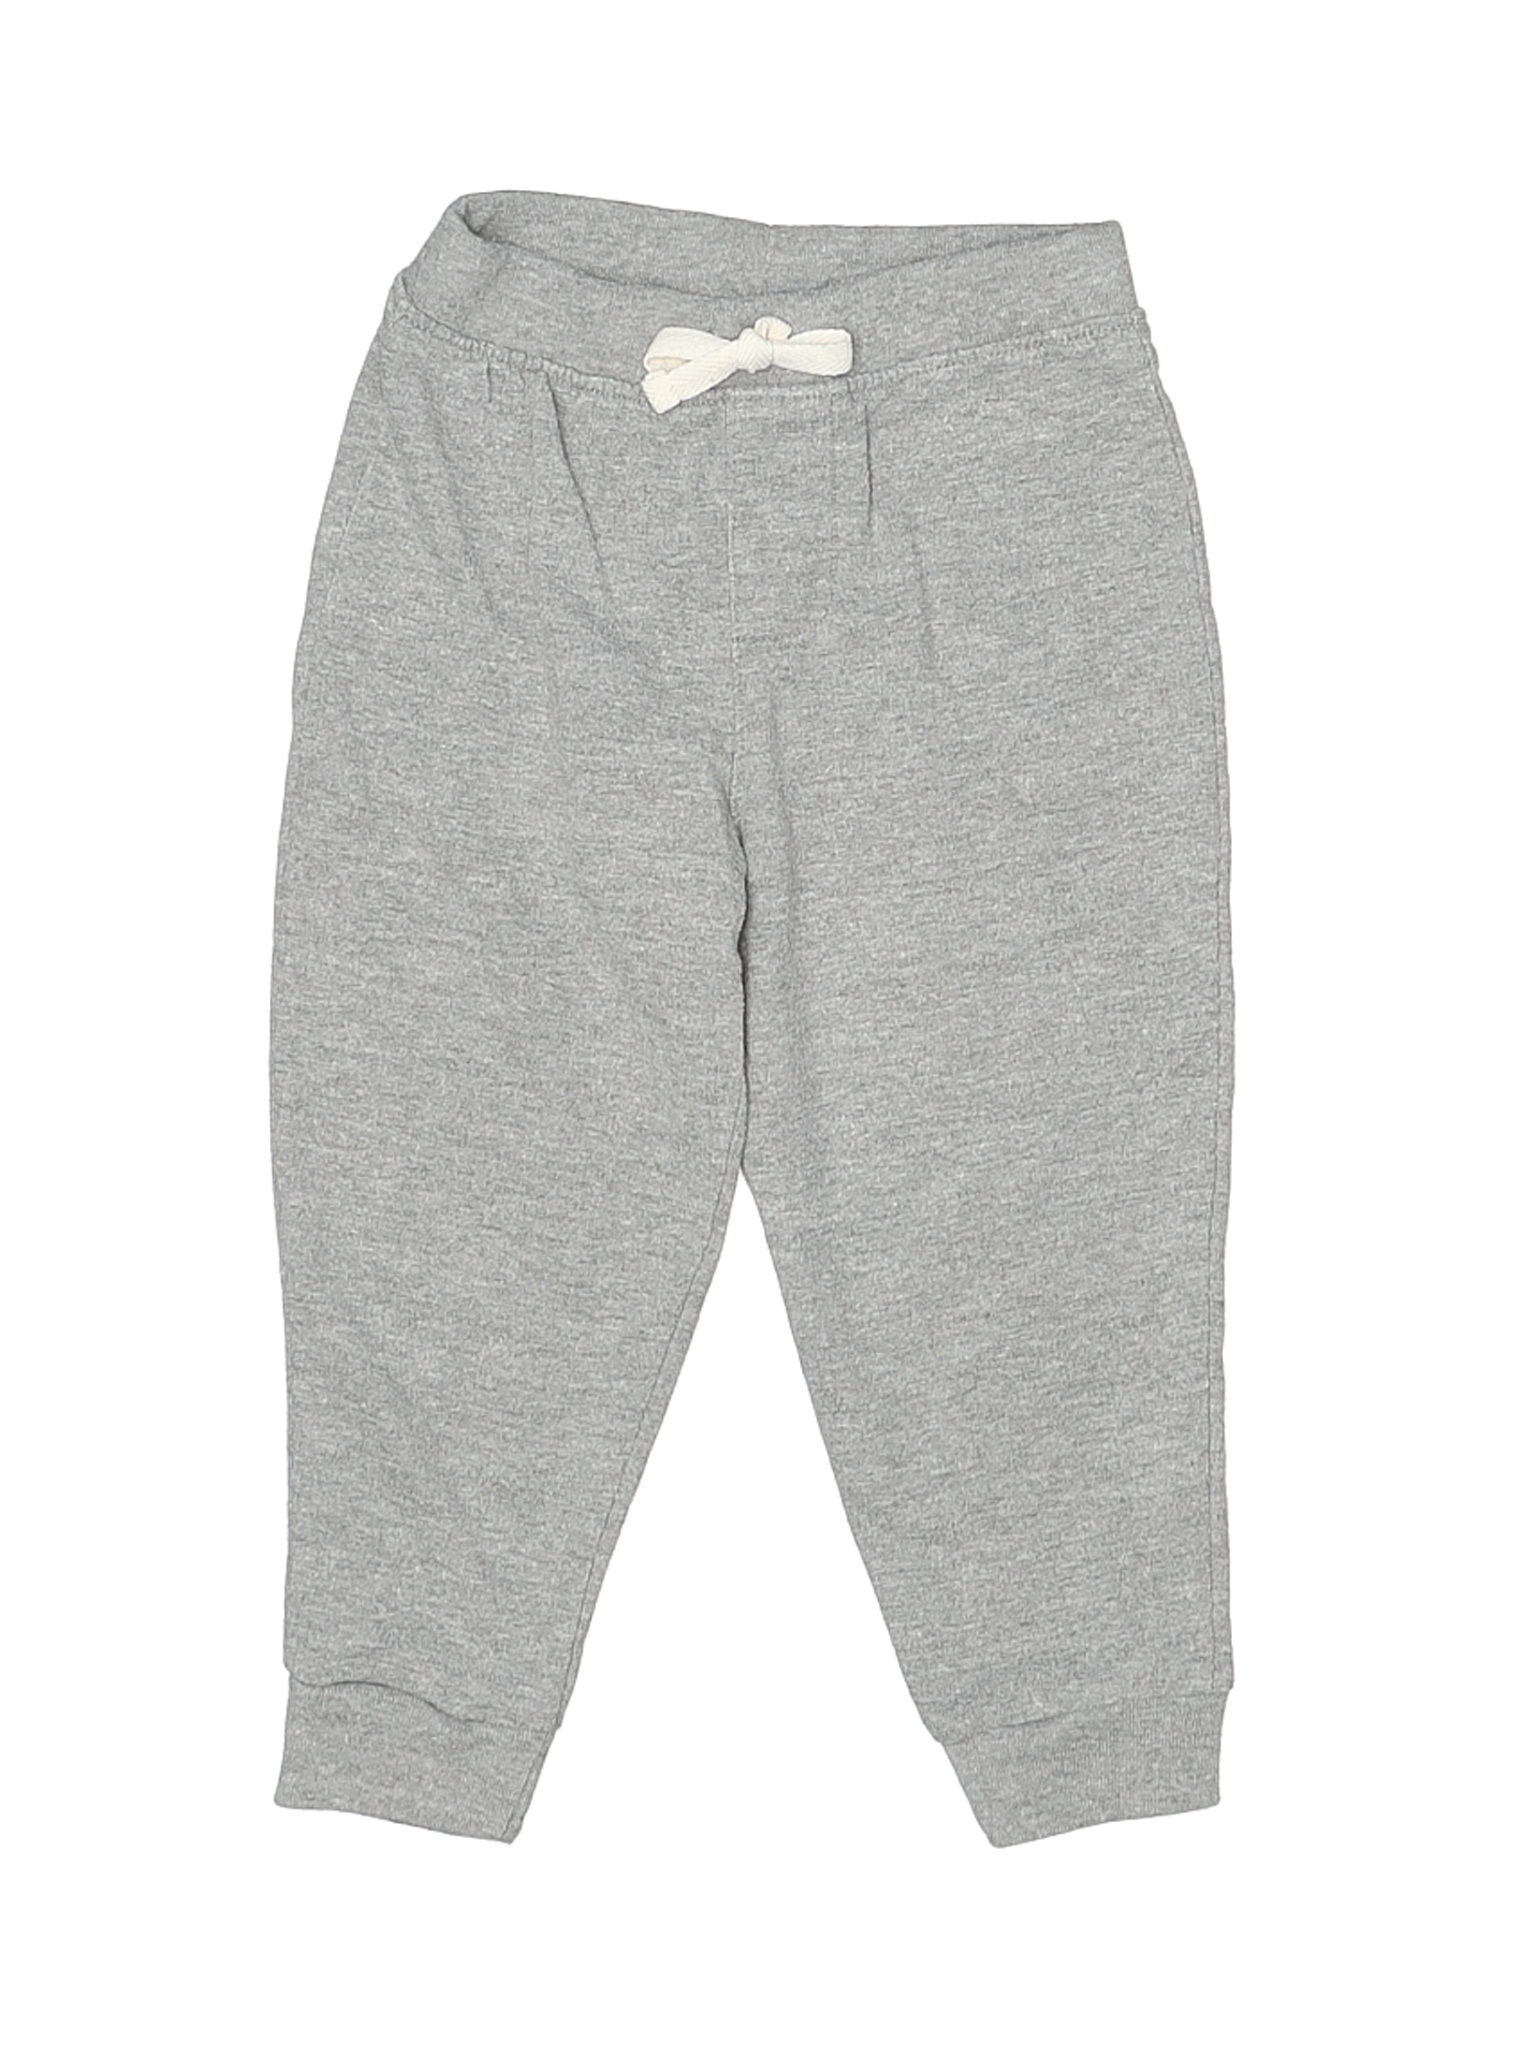 KidTeez Girls Gray Sweatpants 24 Months | eBay